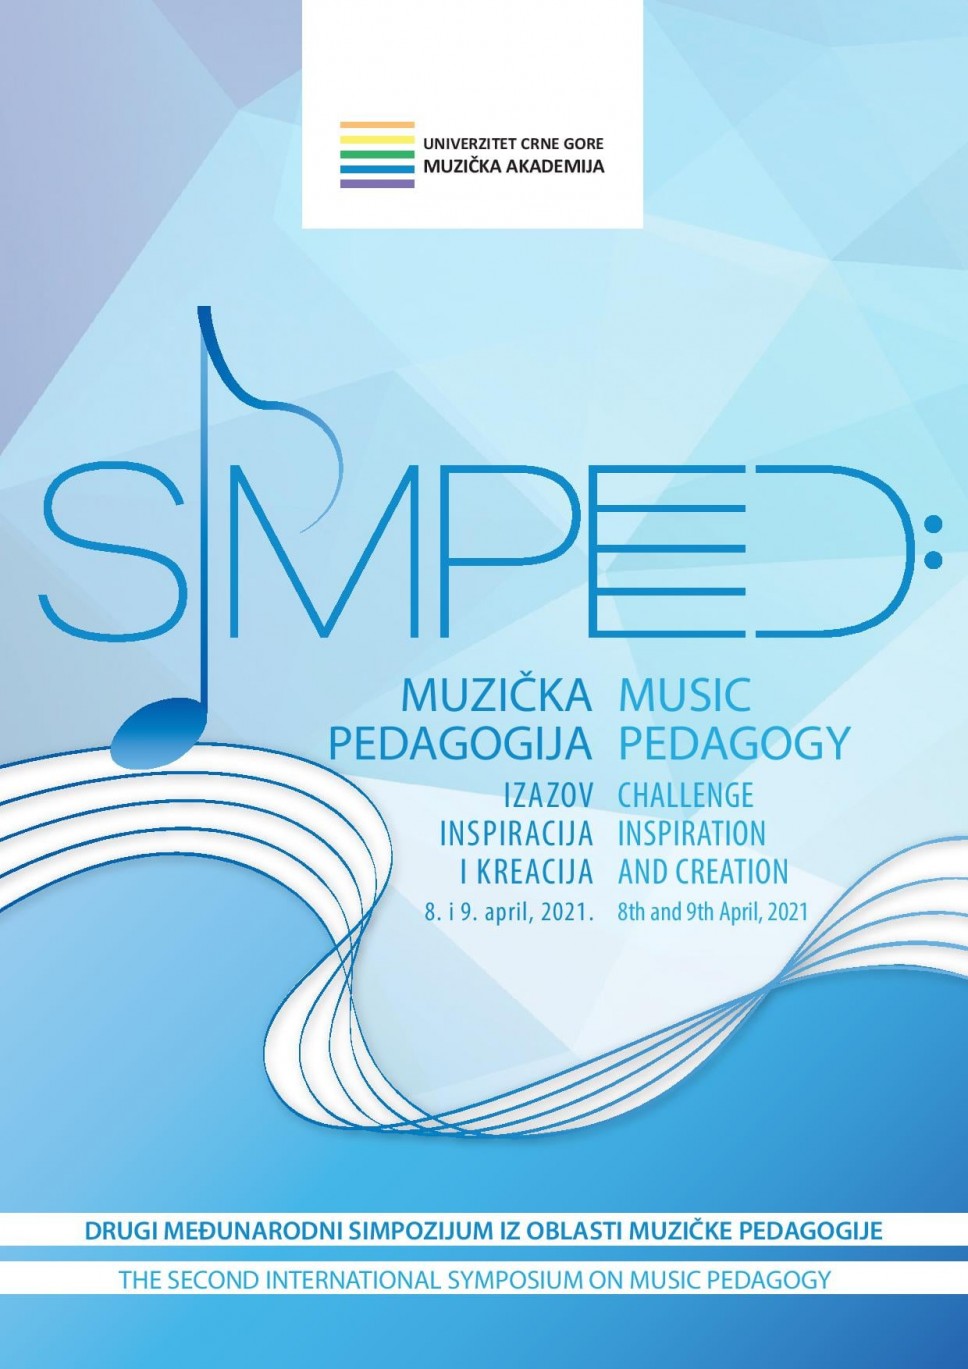 Muzička akademija organizuje SIMPED2021